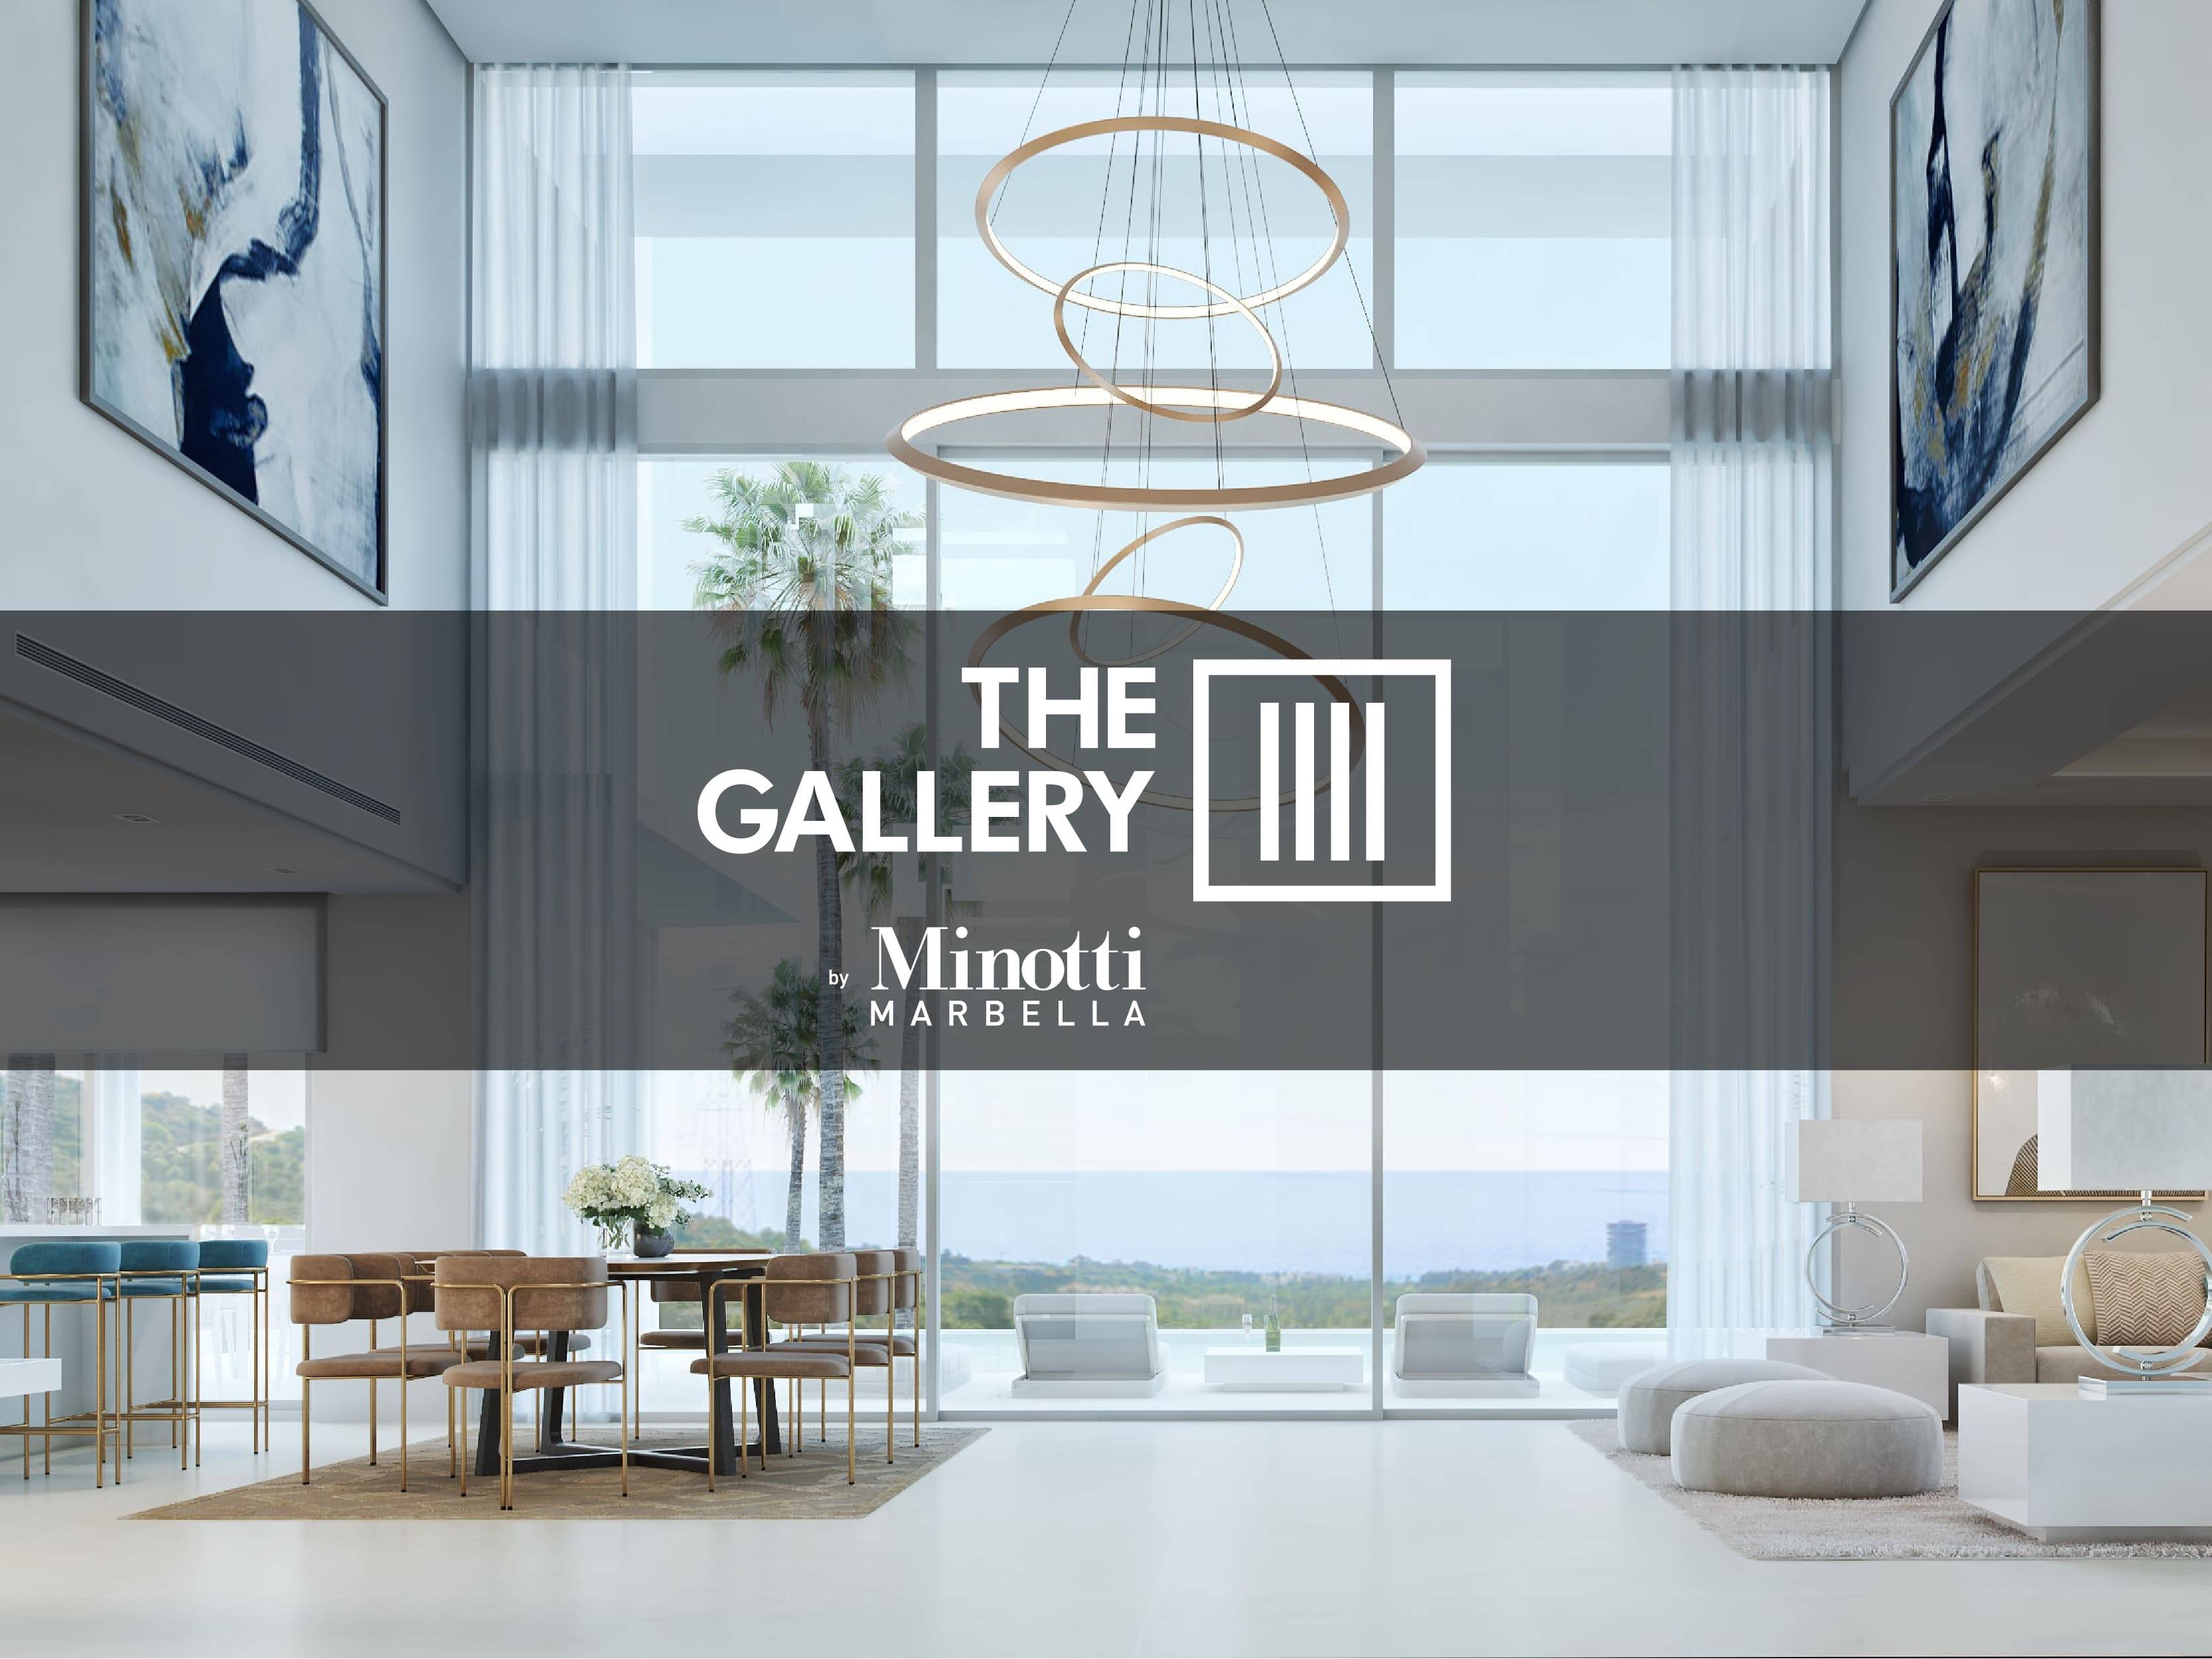 The Gallery by Minotti Marbella